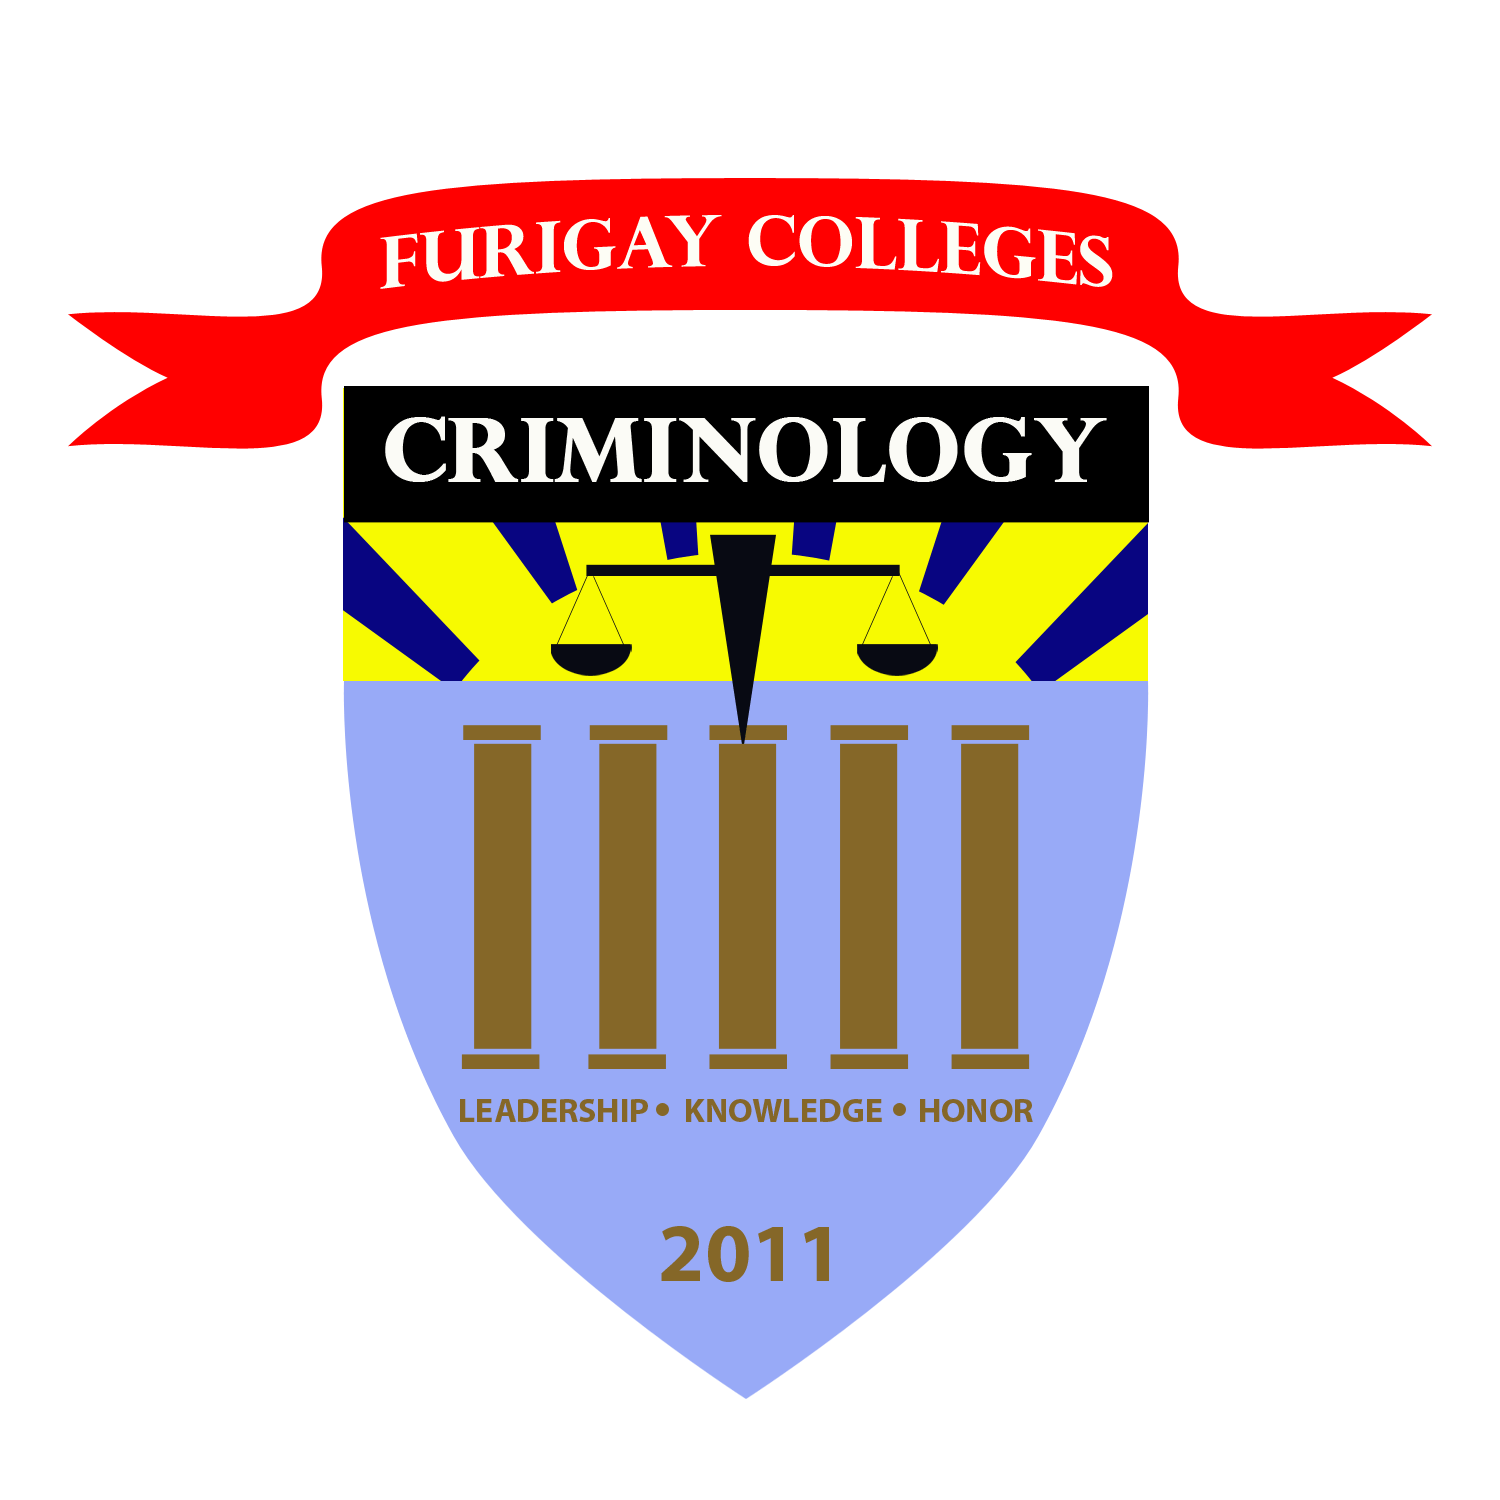 Criminology Logo - File:CRIMINOLOGY LOGO.png - Wikimedia Commons